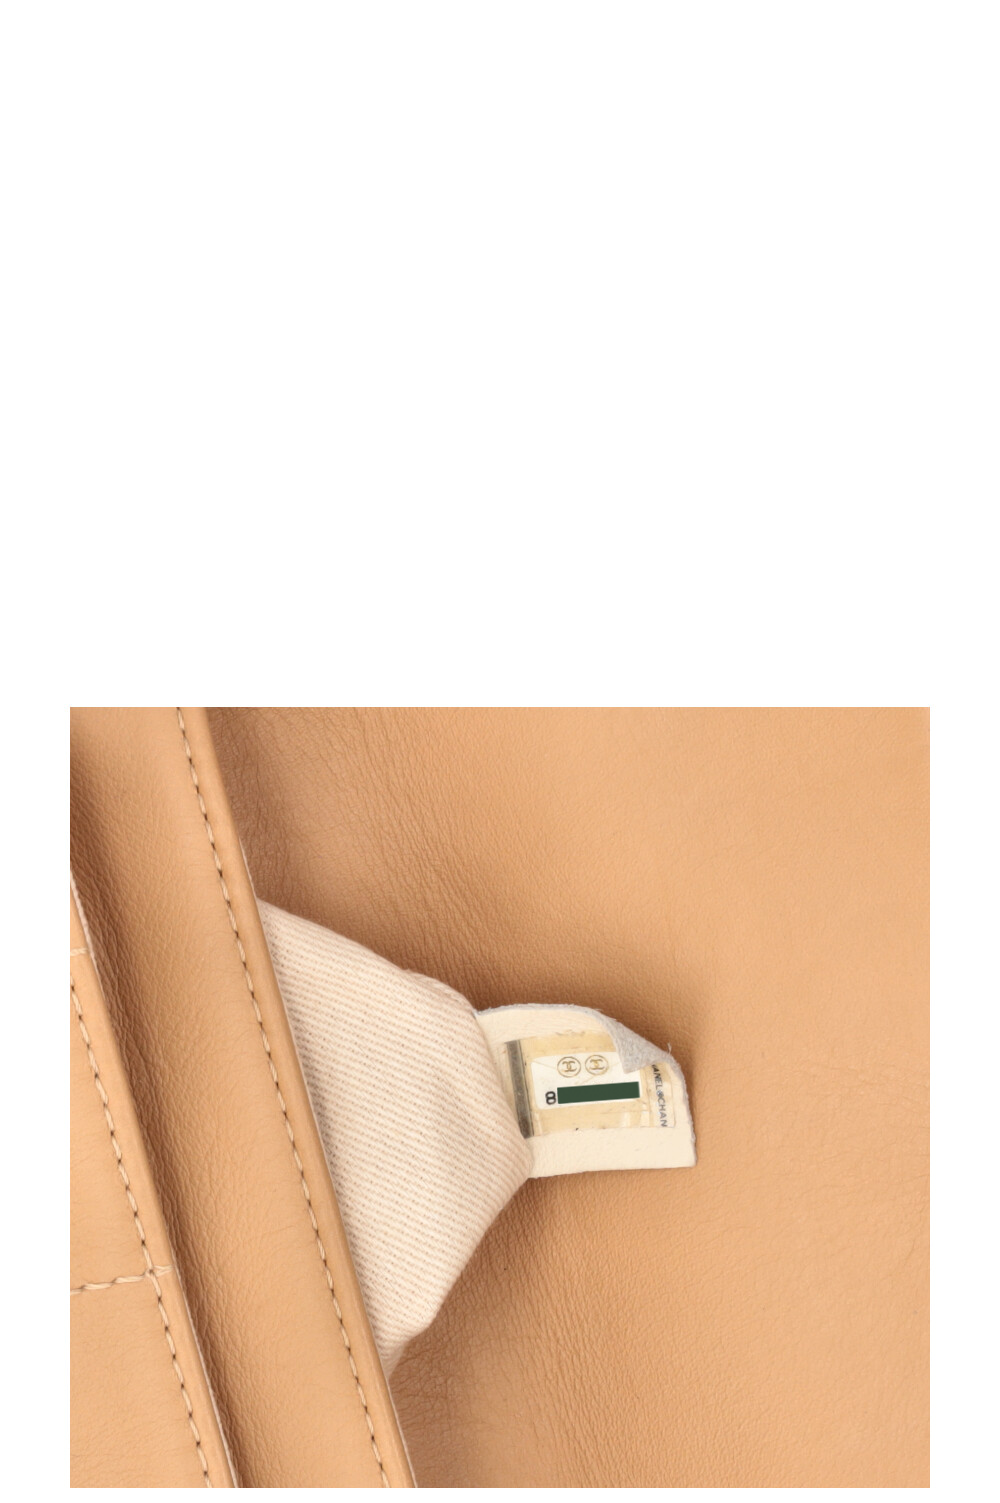 CHANEL Chocolate Bar Handbag Beige Leather